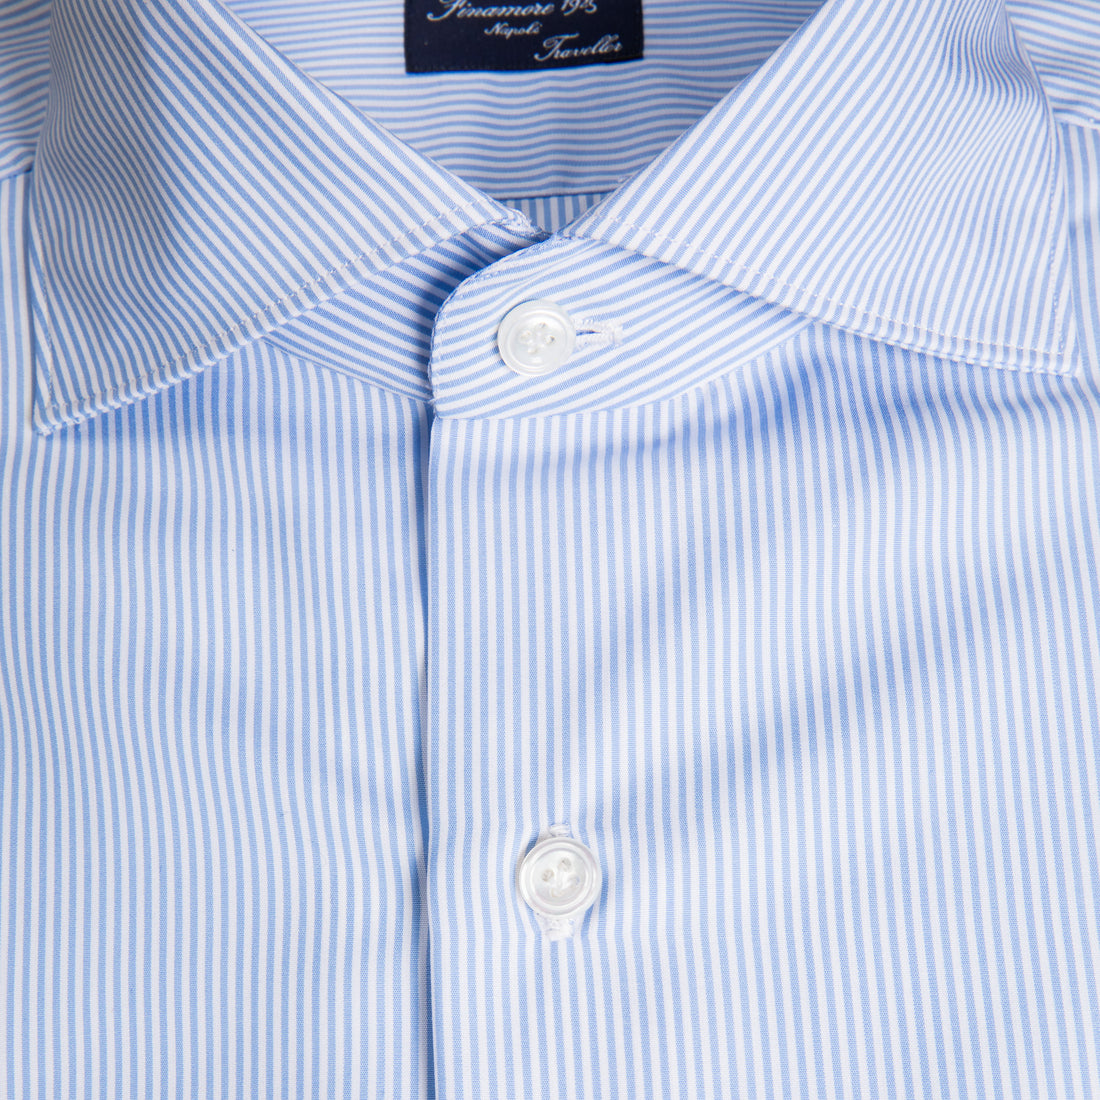 Finamore 'Traveller' shirt Napoli fit Collar Eduardo Alumo light Blue stripe poplin